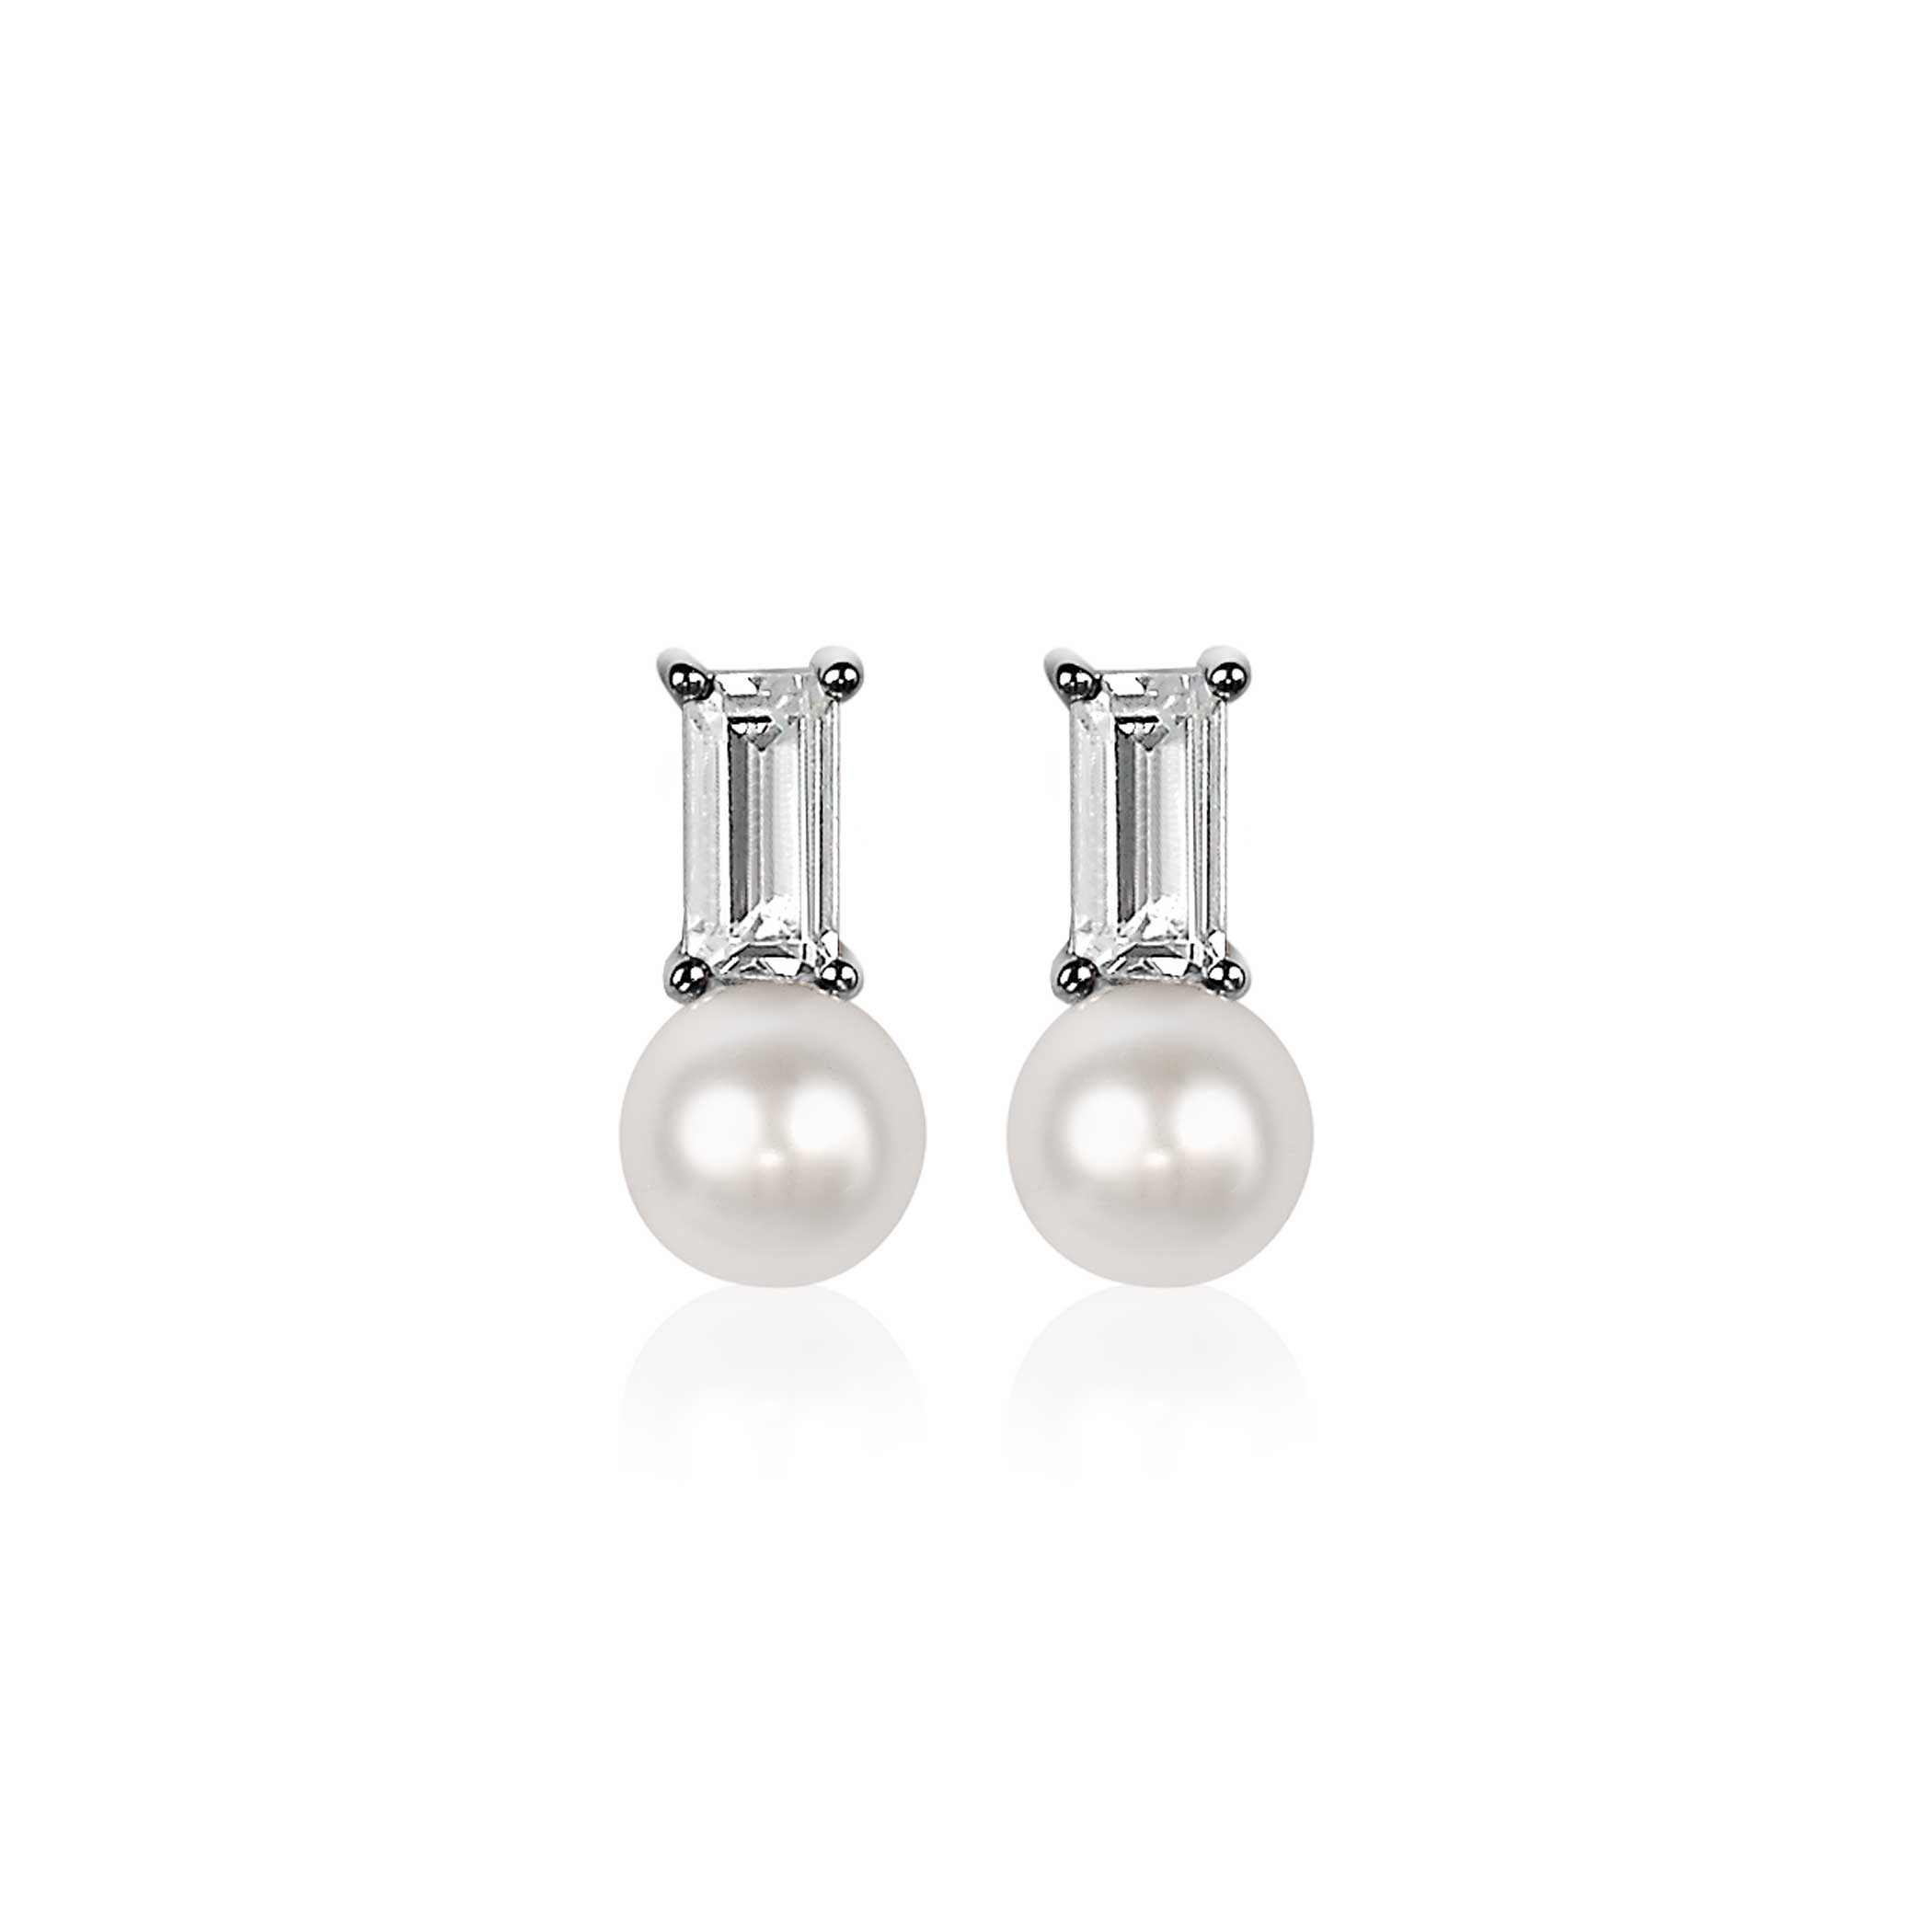 ZINZI Sterling Silver Stud Earrings White Pearl with White Baguette Cut Zirconia ZIO2135